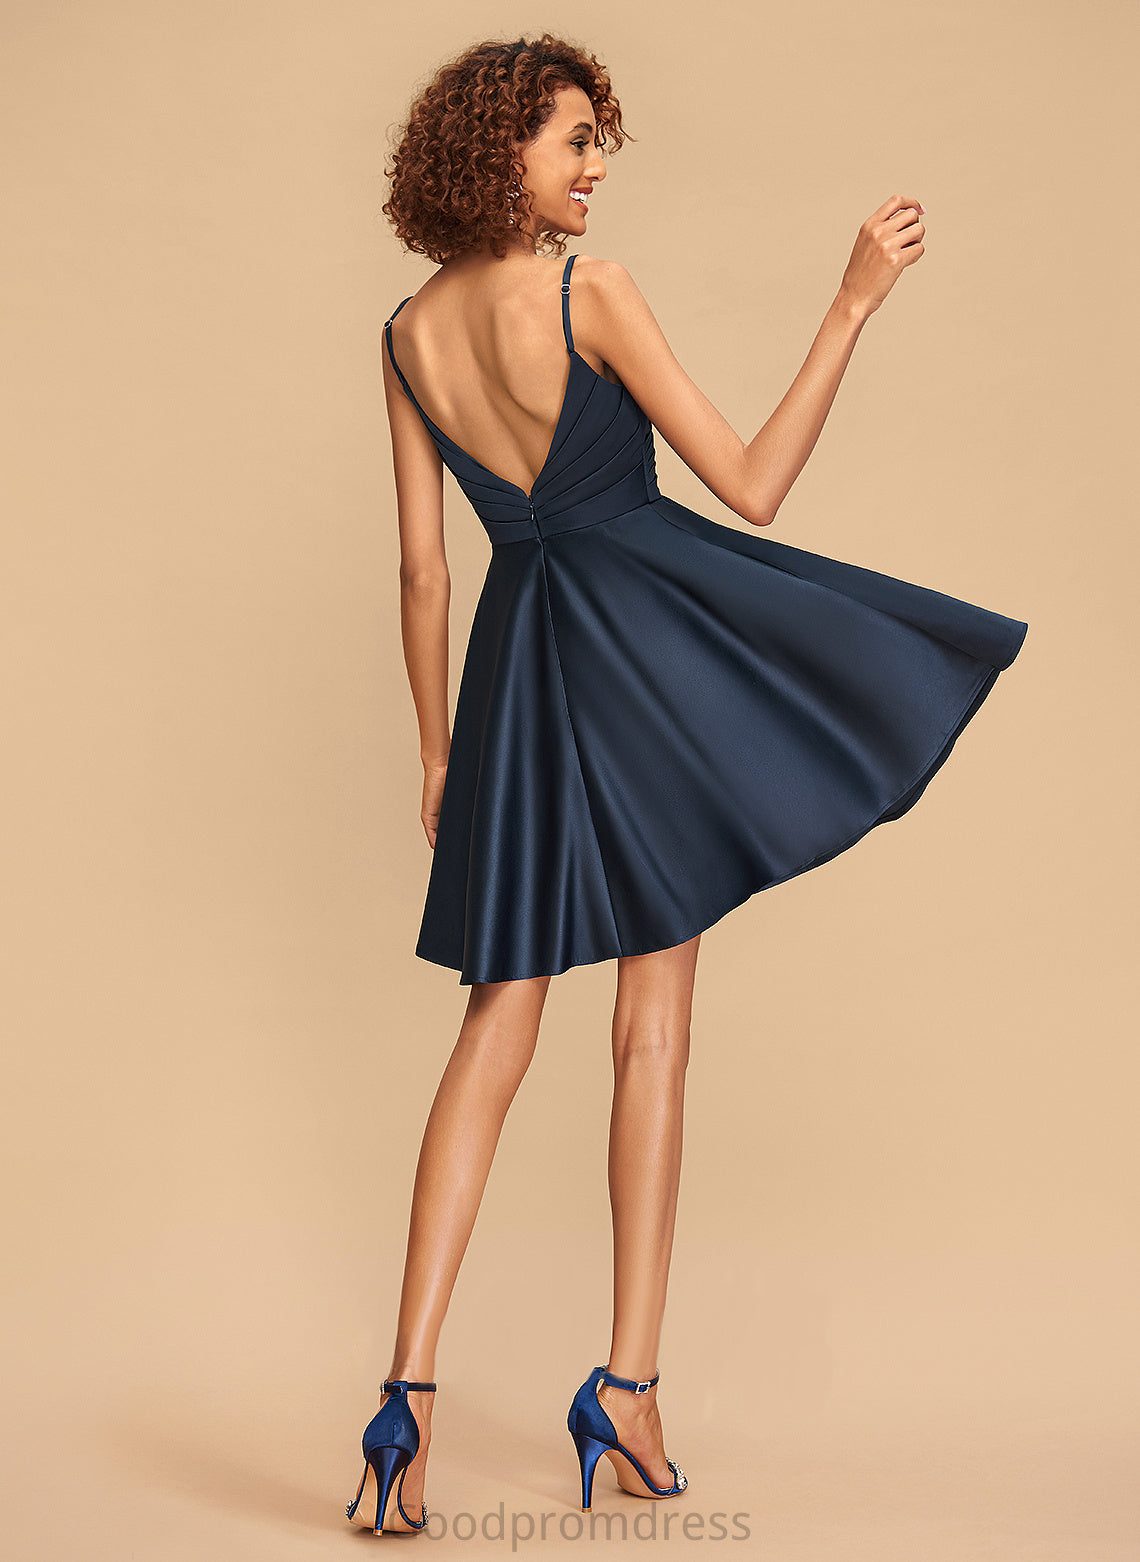 Beading Sequins Satin Ruffle Dress Short/Mini With Homecoming Homecoming Dresses A-Line V-neck Jemima